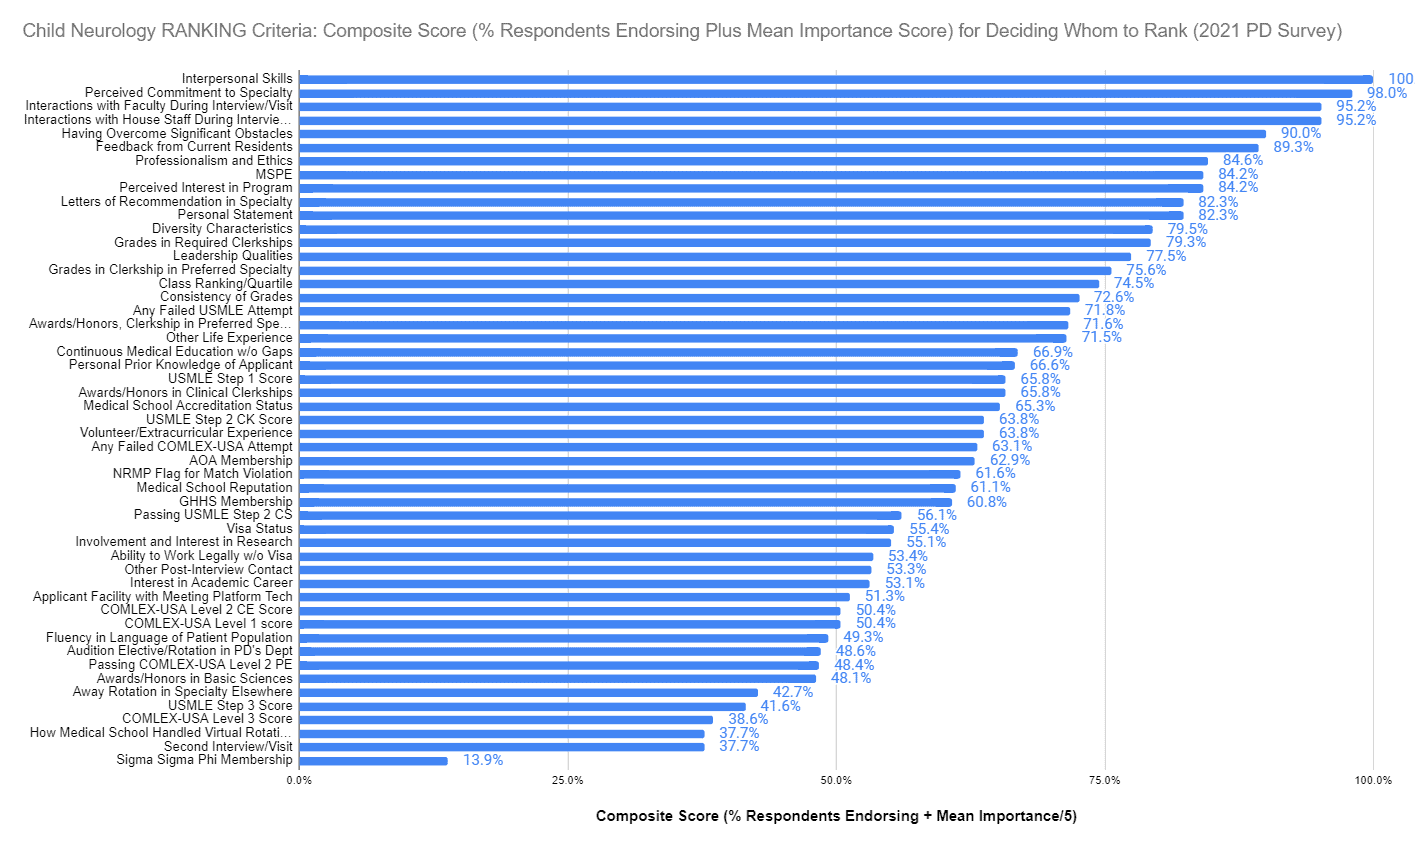 Child Neurology RANKING Criteria Composite Score (% Respondents Endorsing Plus Mean Importance Score) for Deciding Whom to Rank (2021 PD Survey)